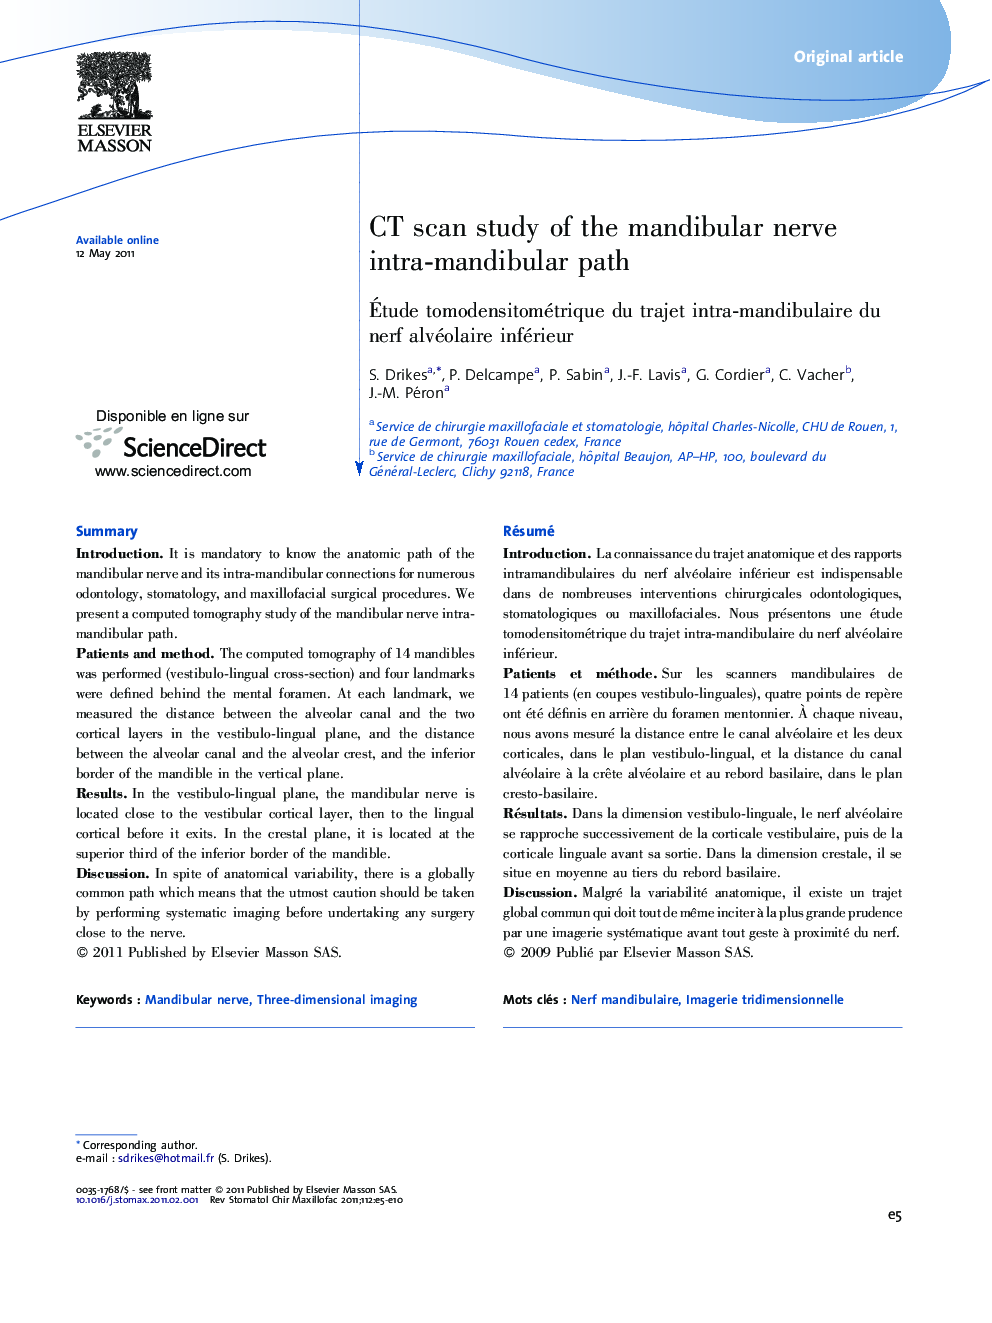 CT scan study of the mandibular nerve intra-mandibular path